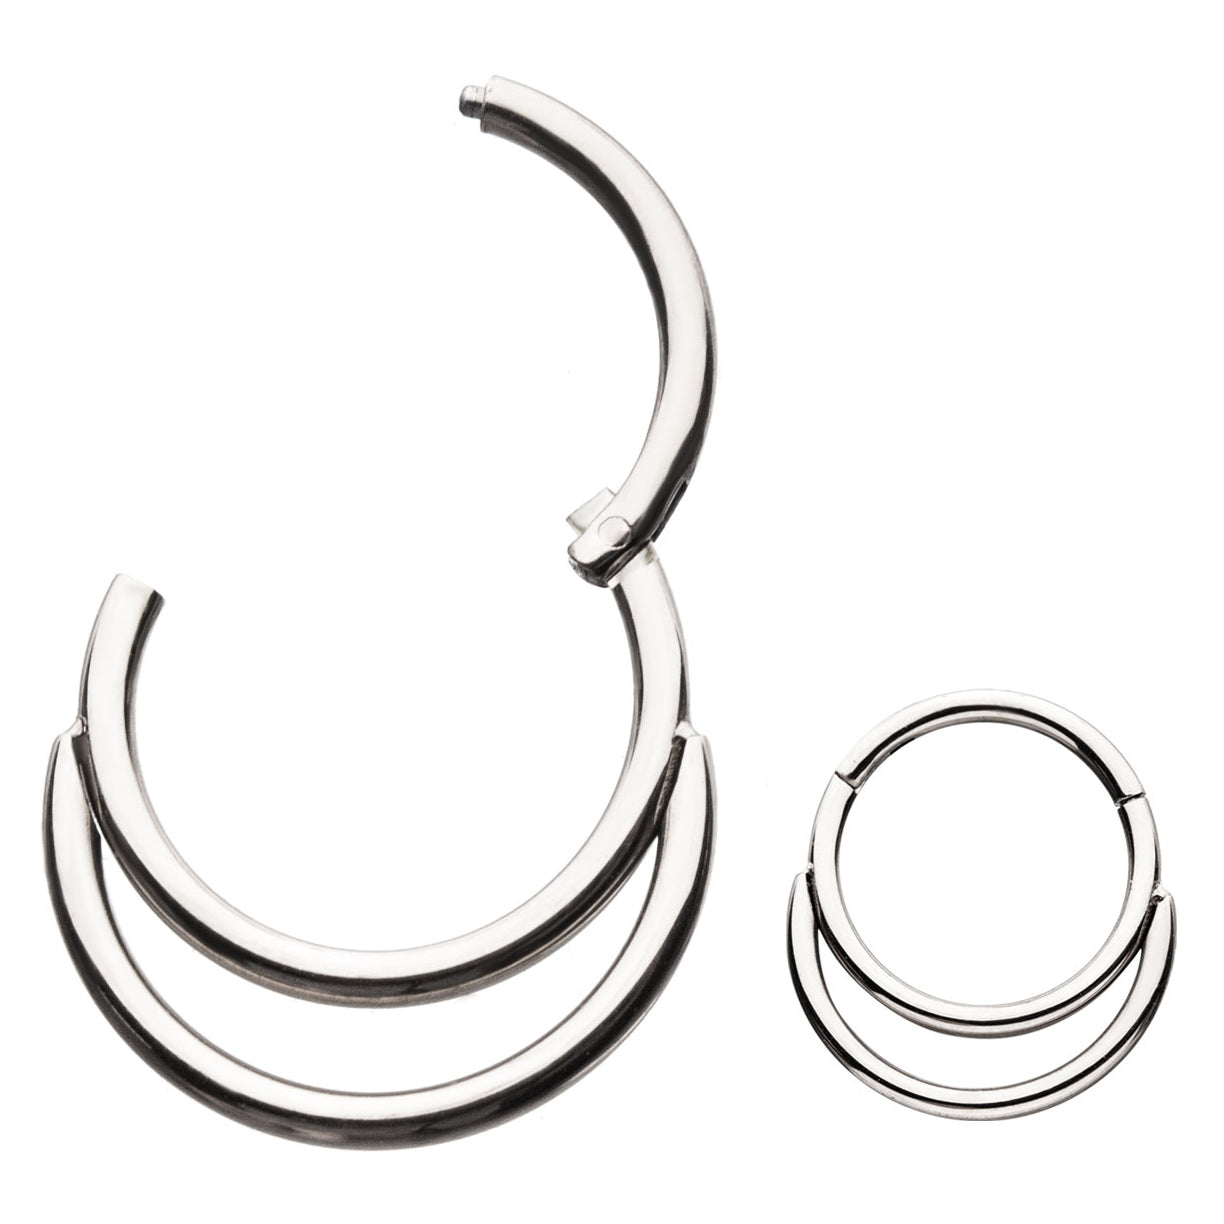 16g Double Stainless Hinged Segment Ring Hinged Rings 16g - 5/16" diameter (8mm) Stainless Steel